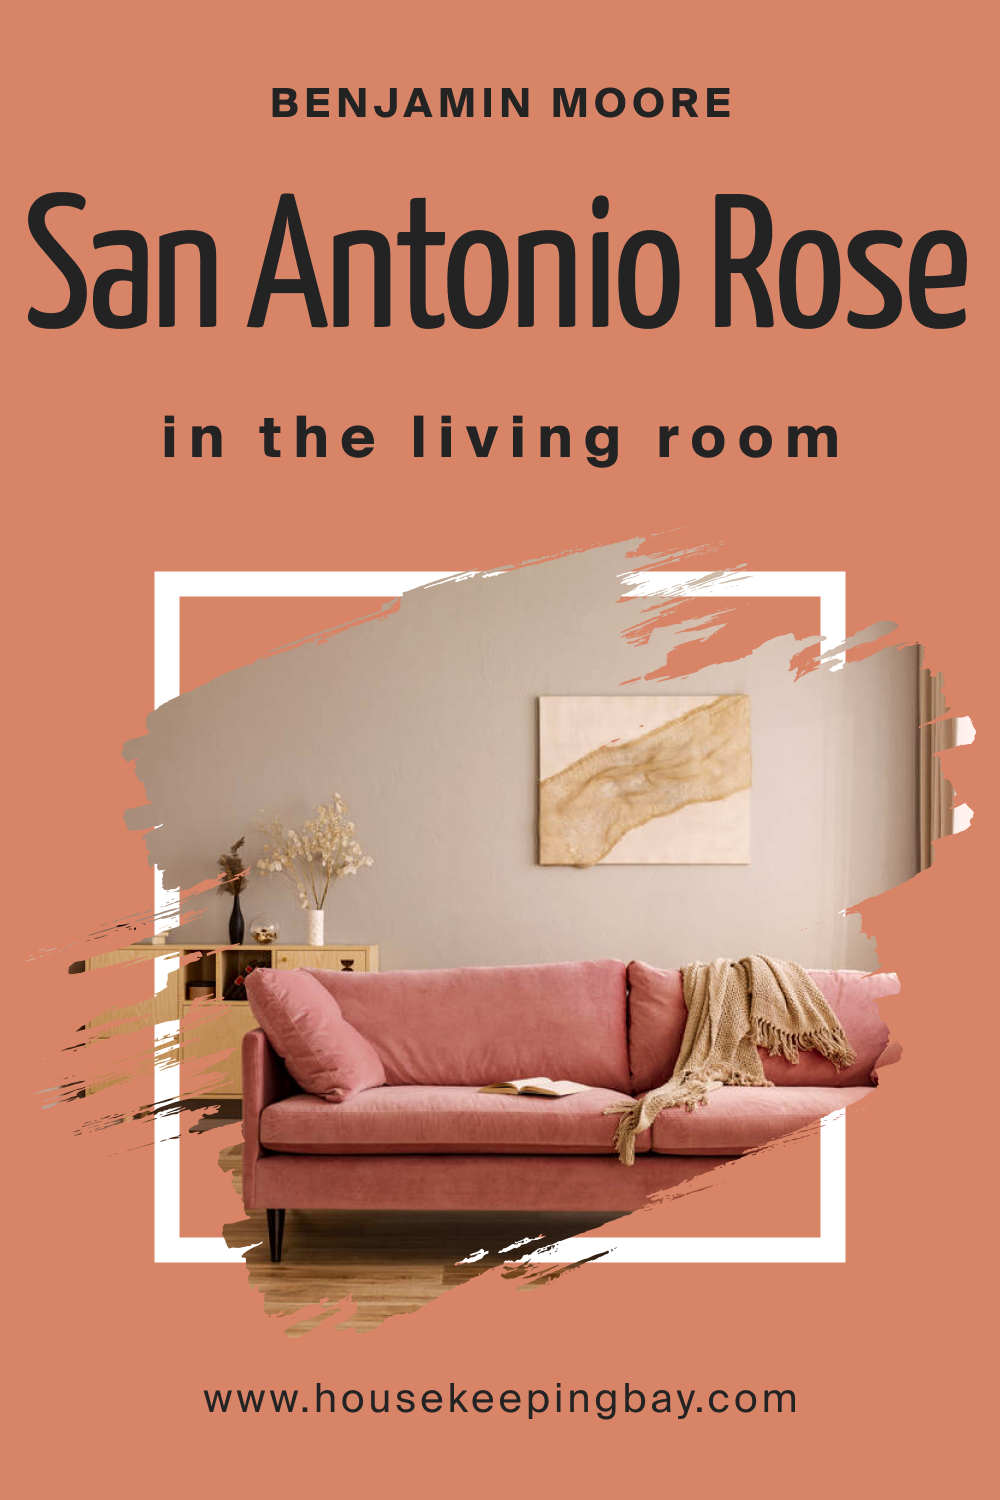 Benjamin Moore. San Antonio Rose 027 in the Living Room